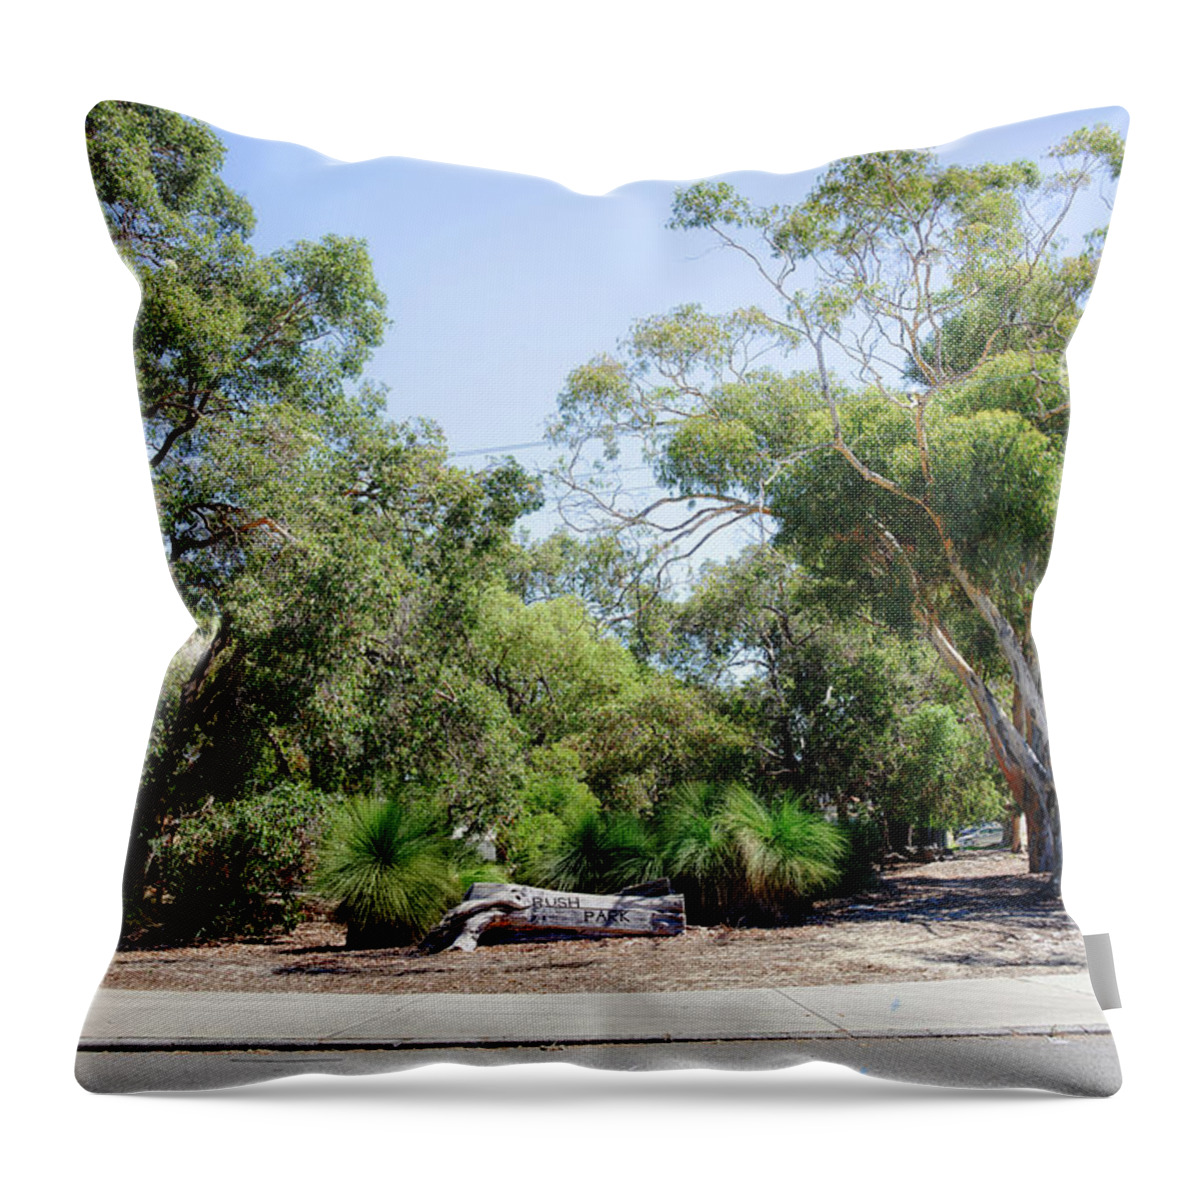 Australia Throw Pillow featuring the photograph Bush Park by Jay Heifetz